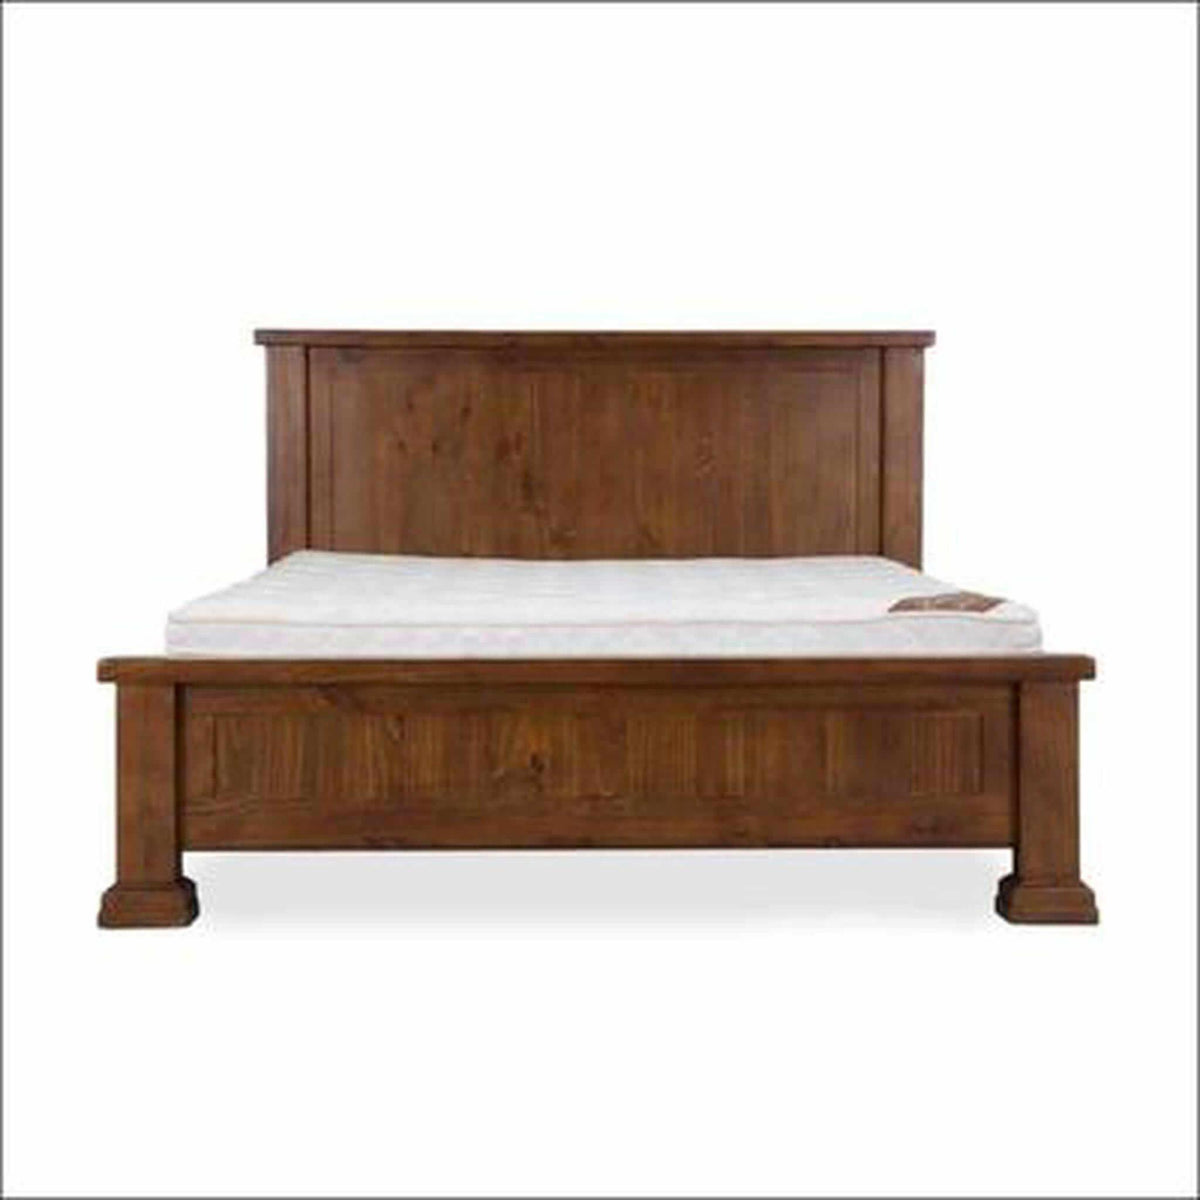 Stylish rustic teak wood bed frame - TimberCraft